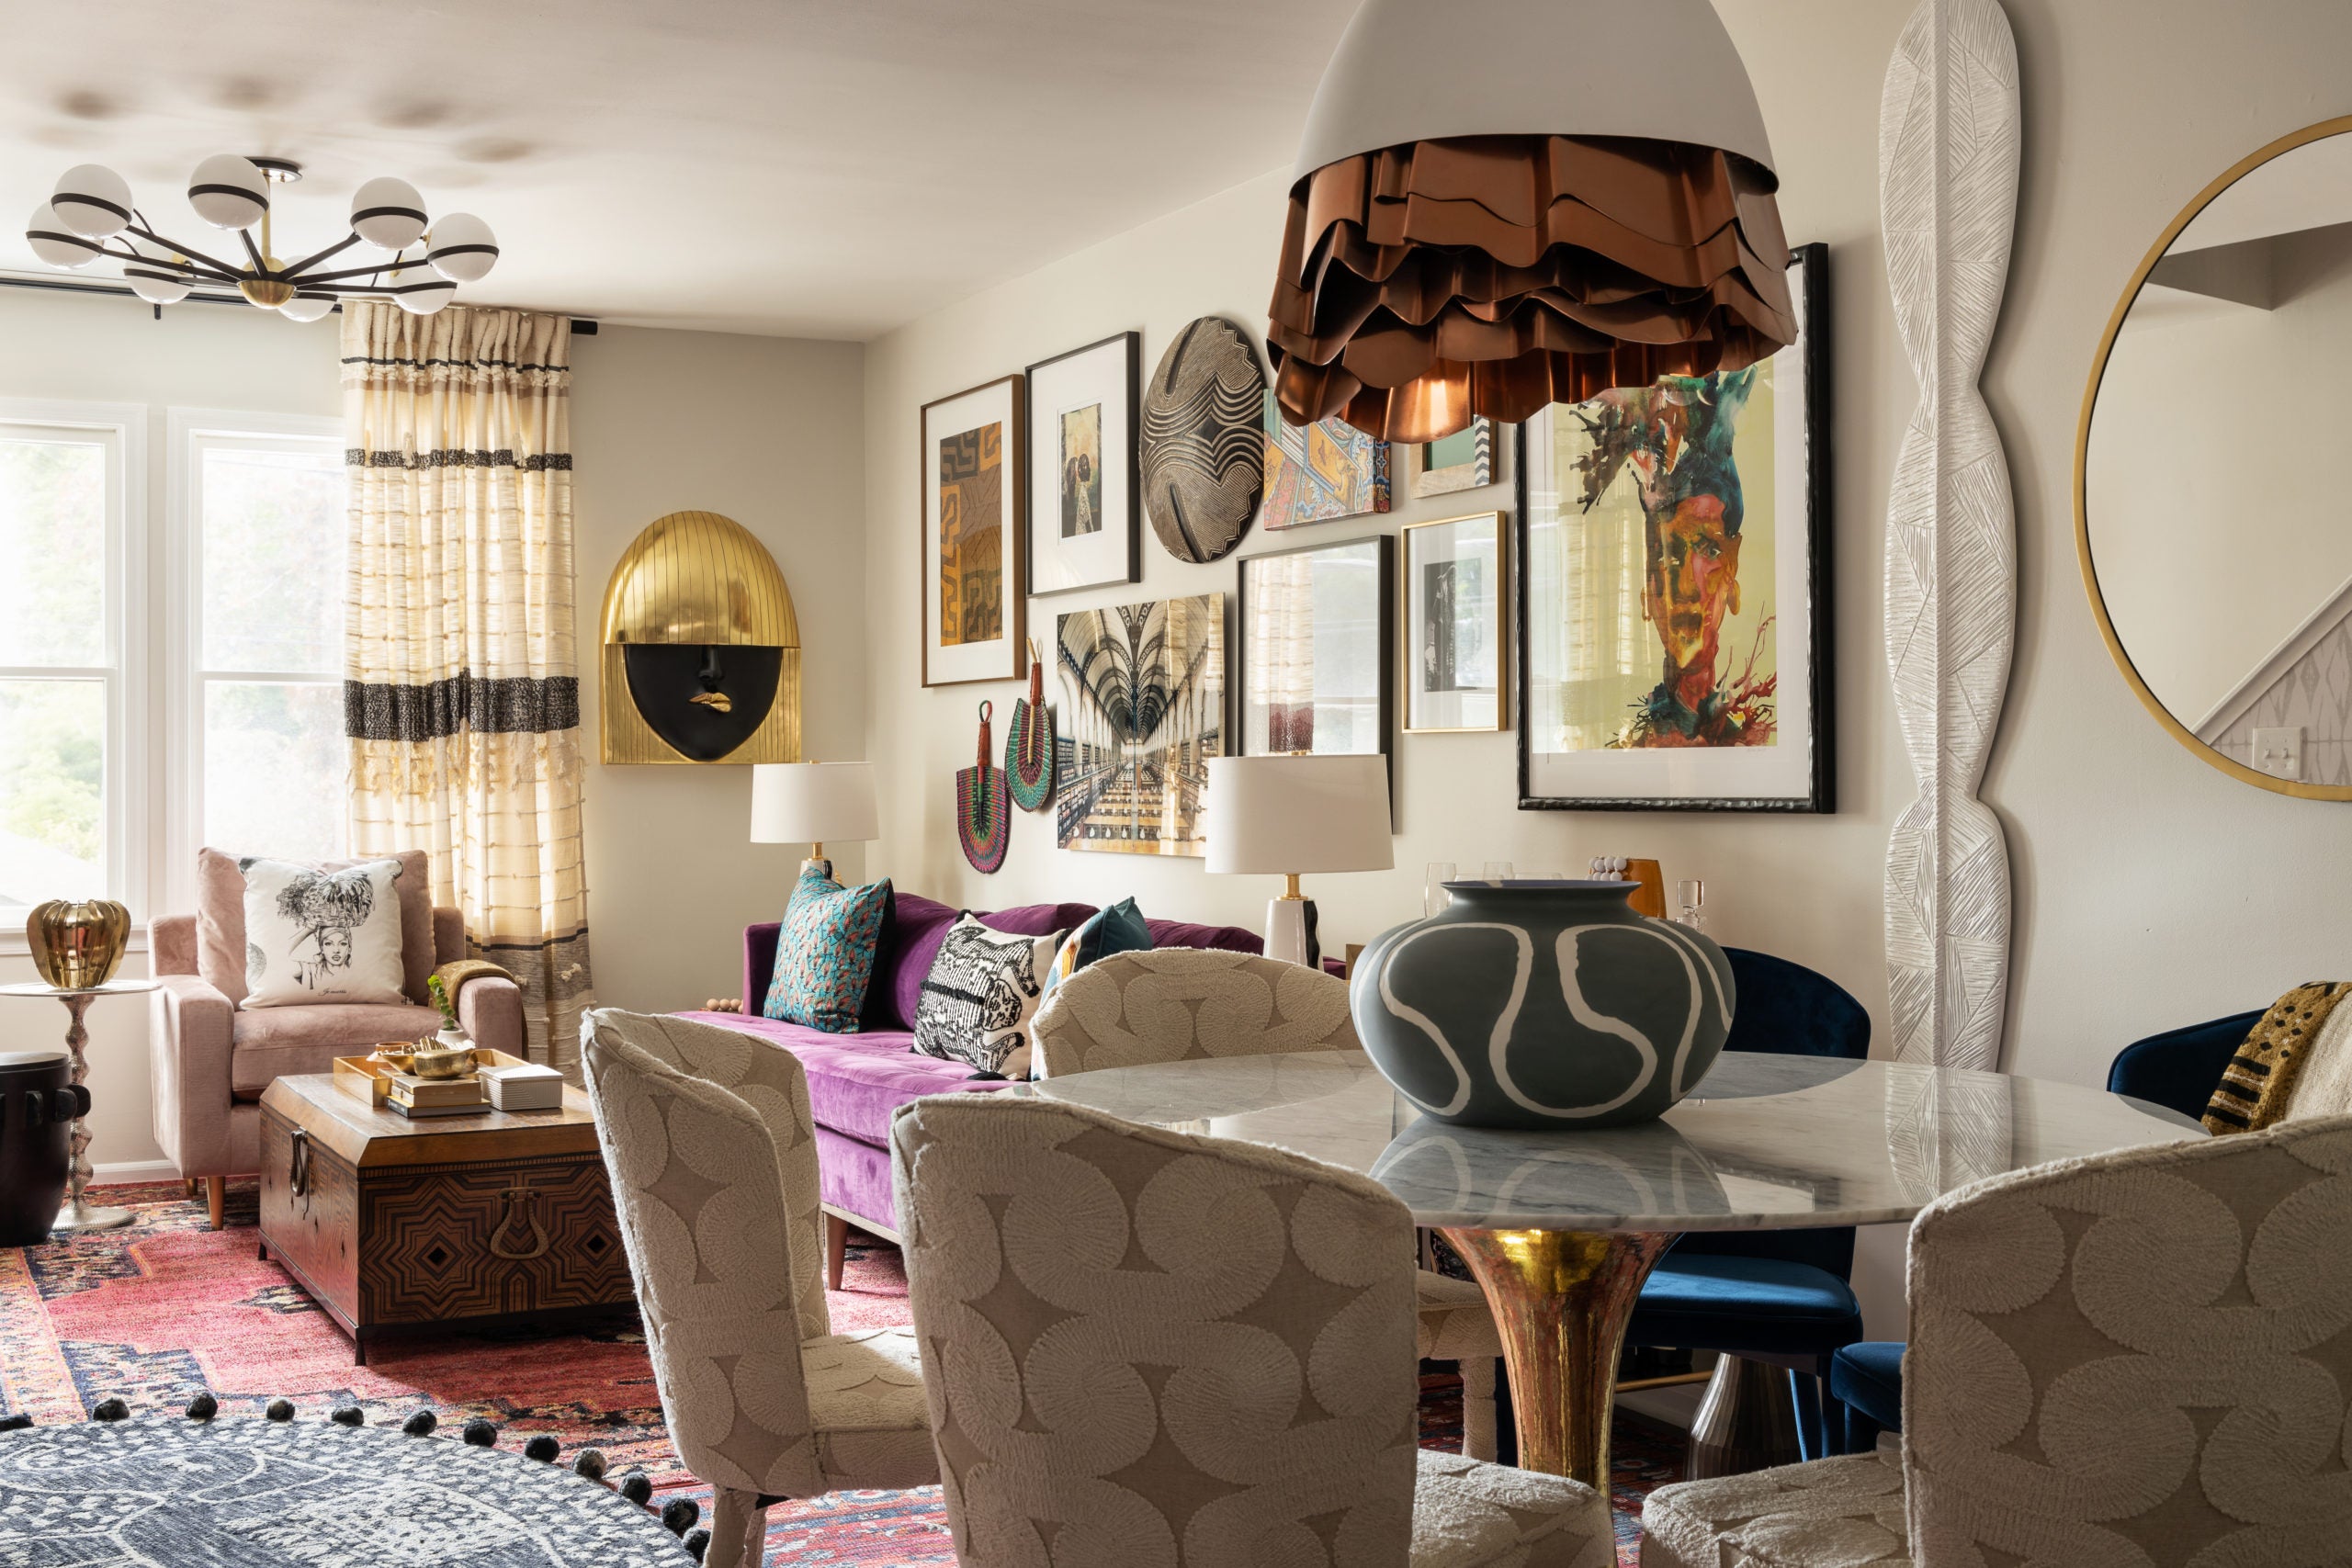 Maximalism home decor ideas that prove more is more - Coaste